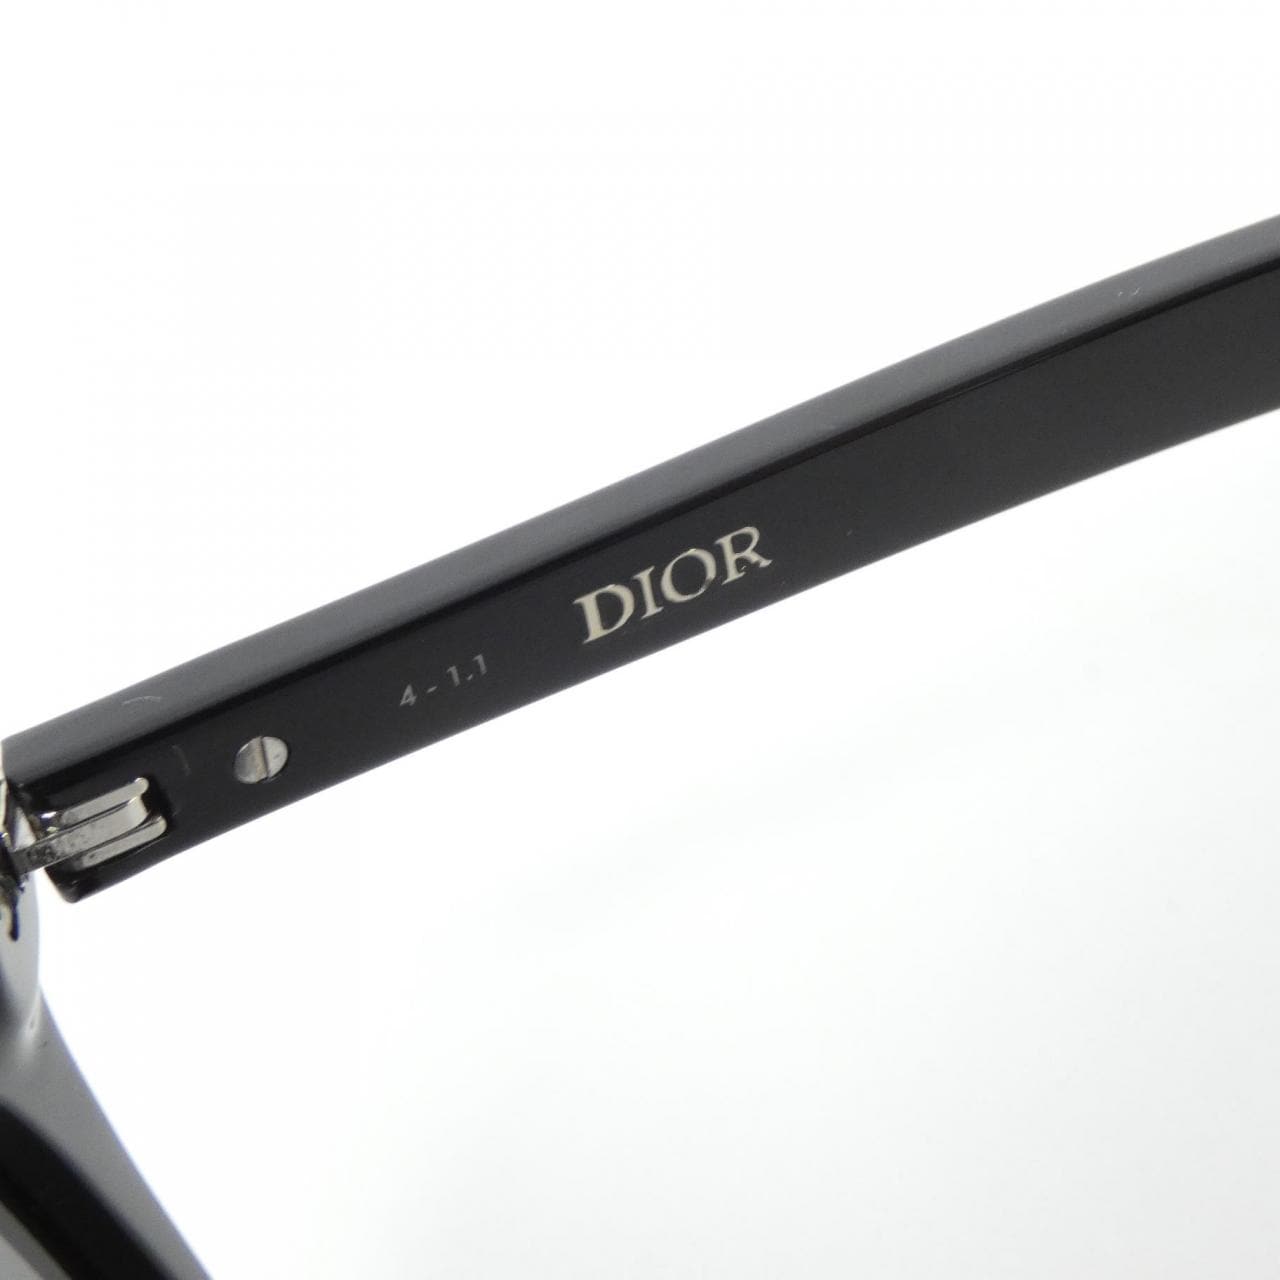 [BRAND NEW] Christian DIOR BLACKSUIT R3I Sunglasses